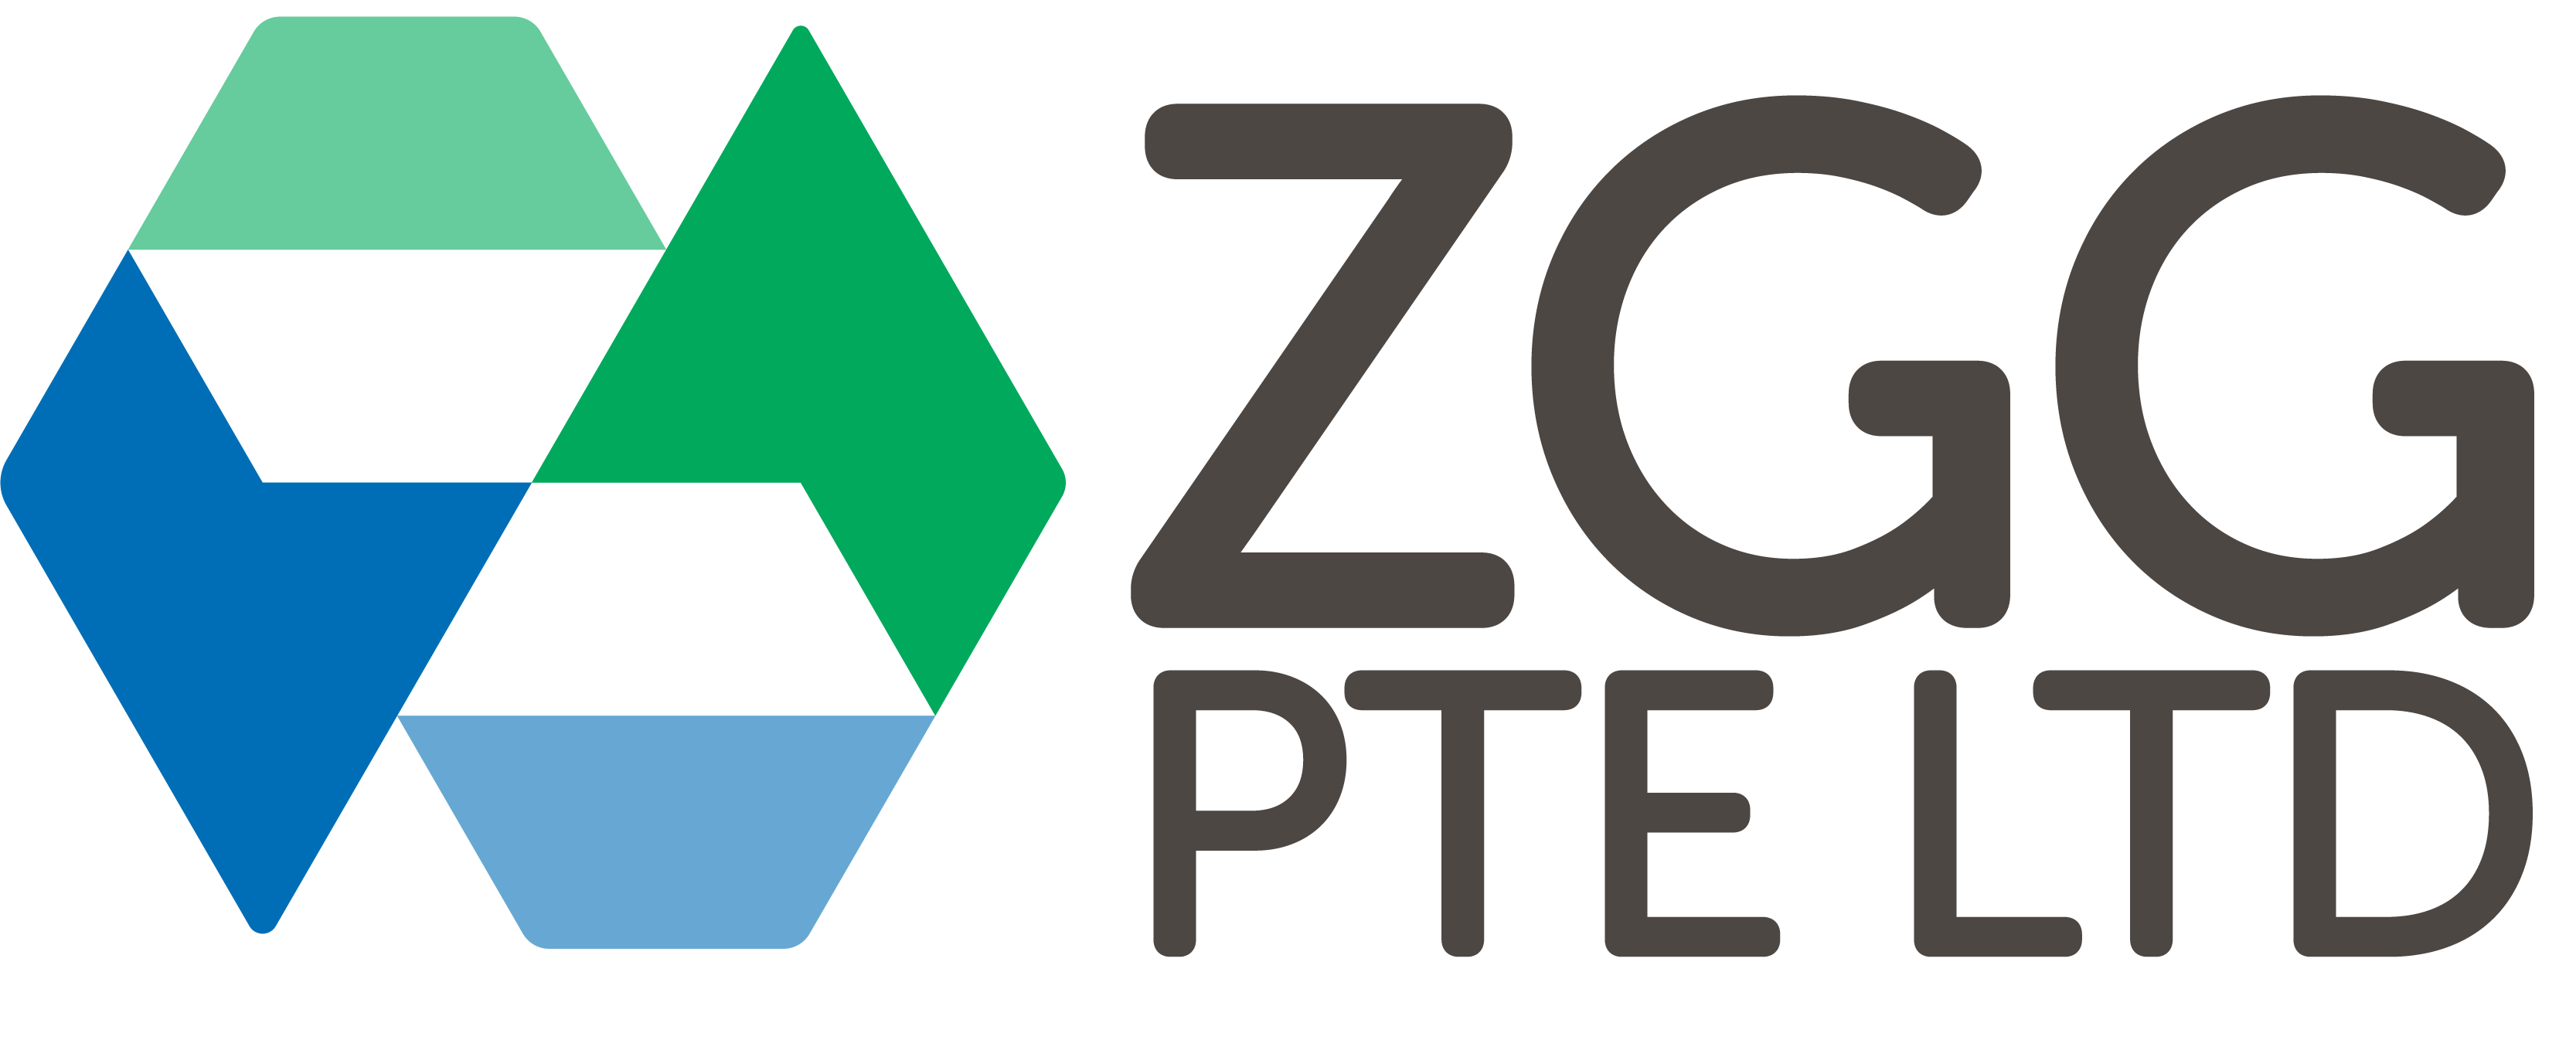 Zgg Pte. Ltd. logo